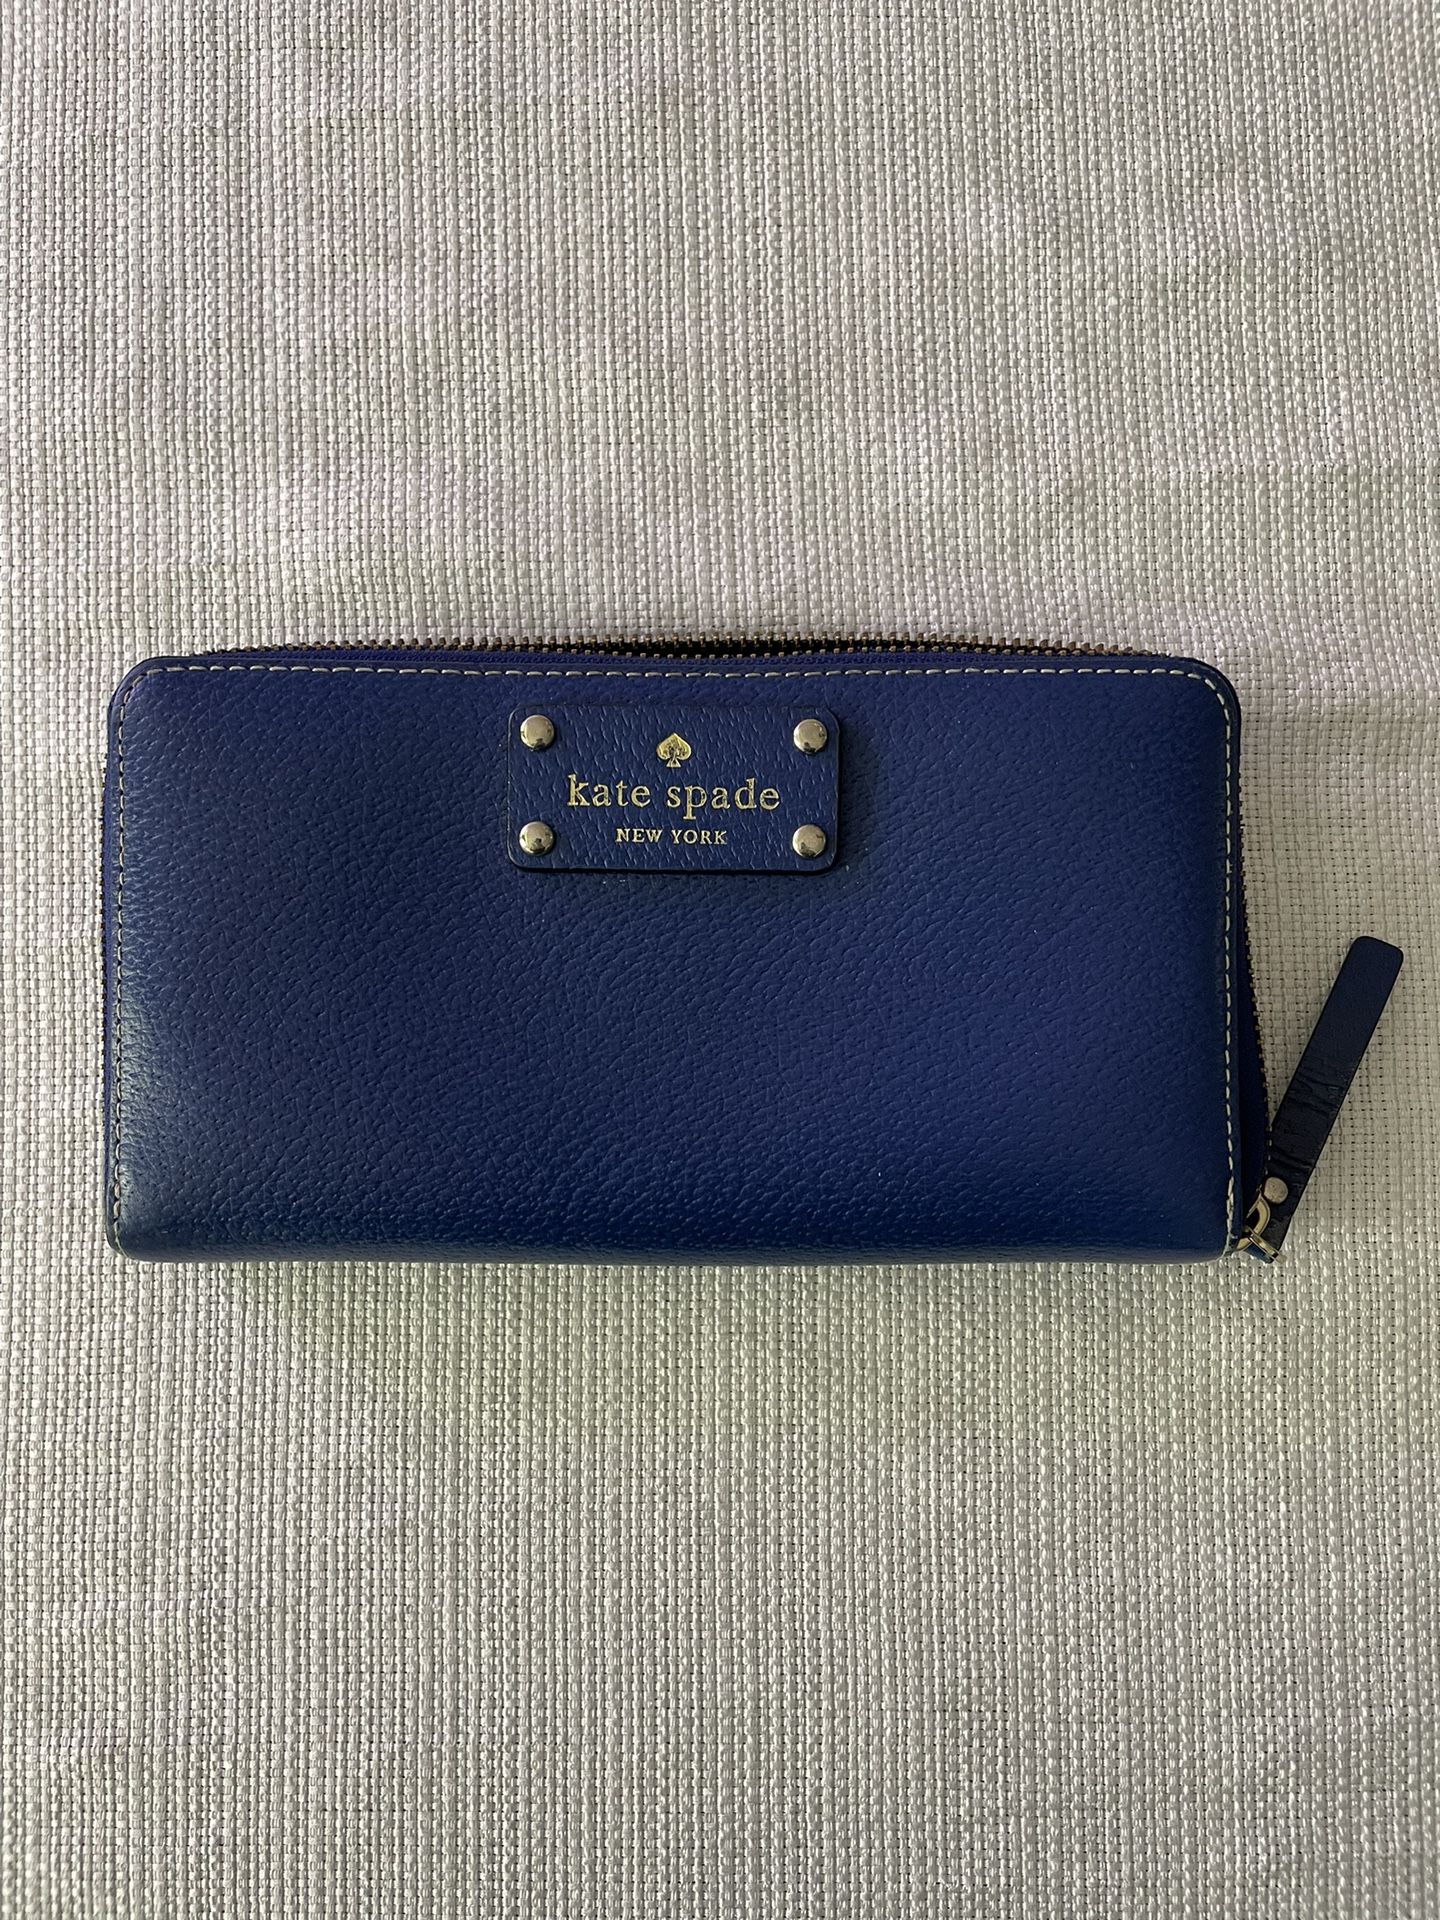 Kate Spade Blue Wallet